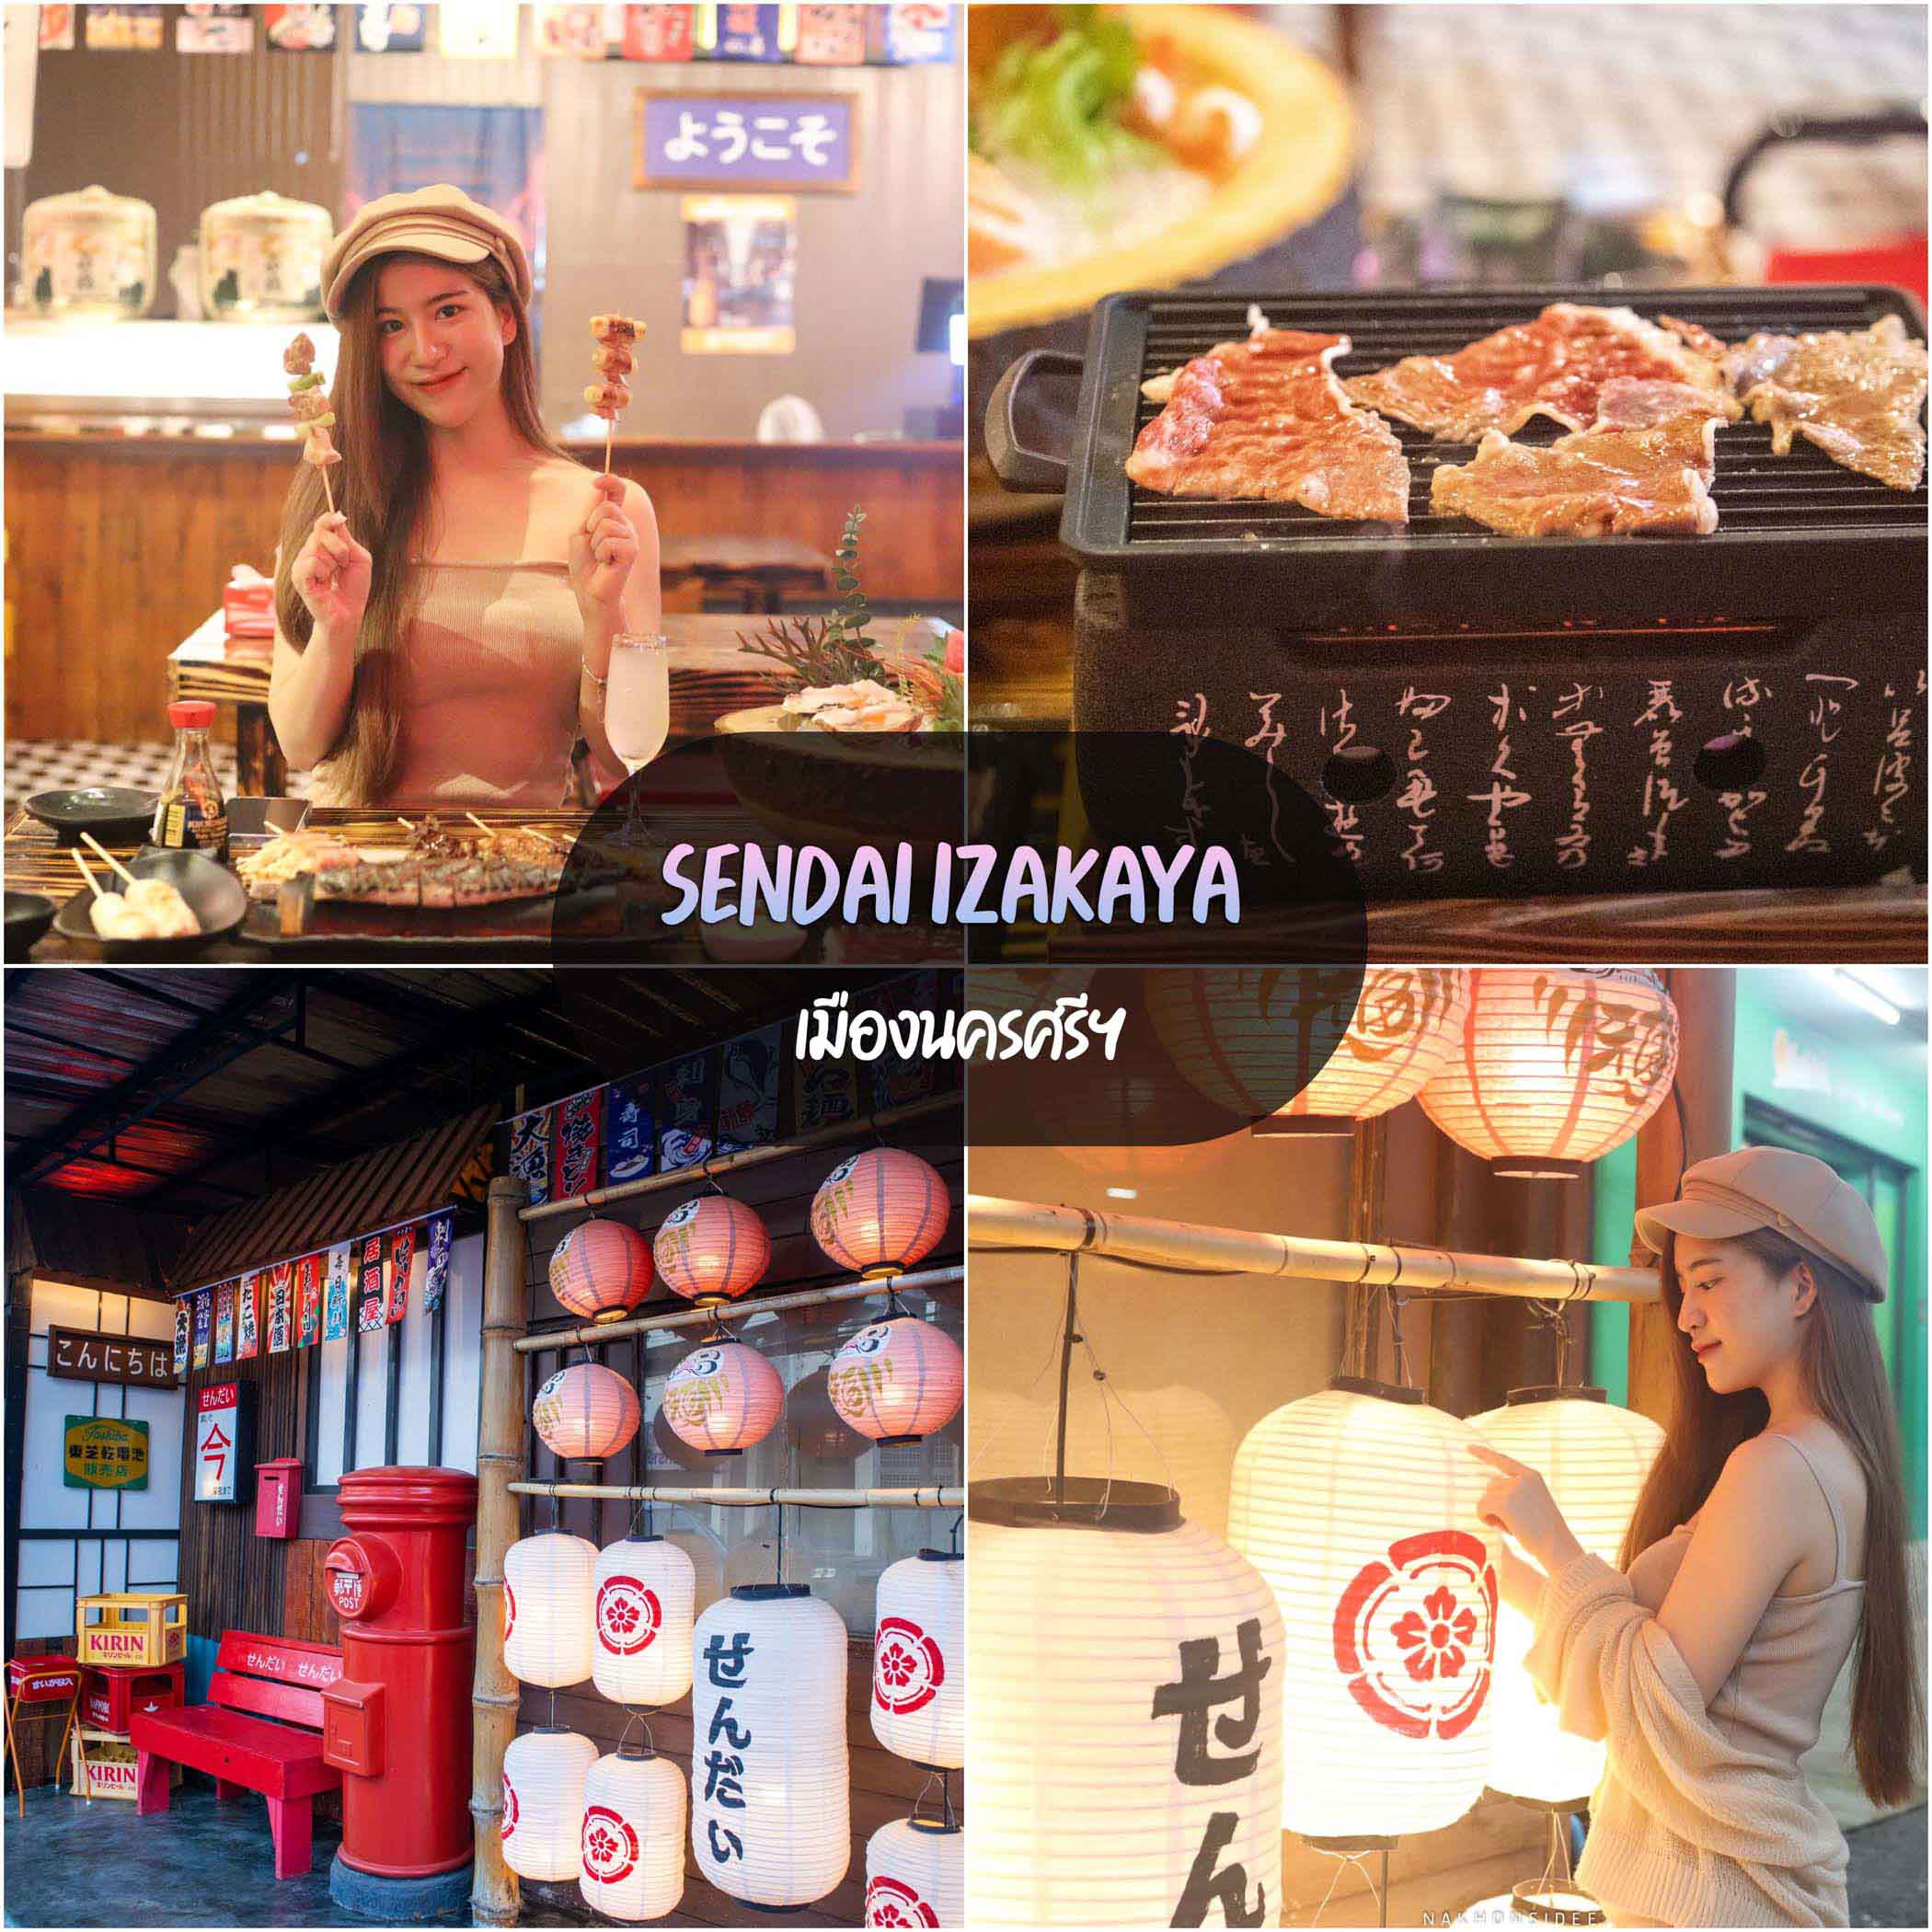 Sendai-Izakaya ร้านนั่งชิวเปิดใหม่ตัวเมืองนครศรี ร้านอาหารนครศรีธรรมราช,ของกิน,ร้านอาหาร,อร่อย,ก๋วยเตี๋ยว,คาเฟ่,ร้านเด็ด,ชาบู,ปิ้งย่าง,อาหารญี่ปุ่น,ร้านอร่อย,อาหารพื้นบ้าน